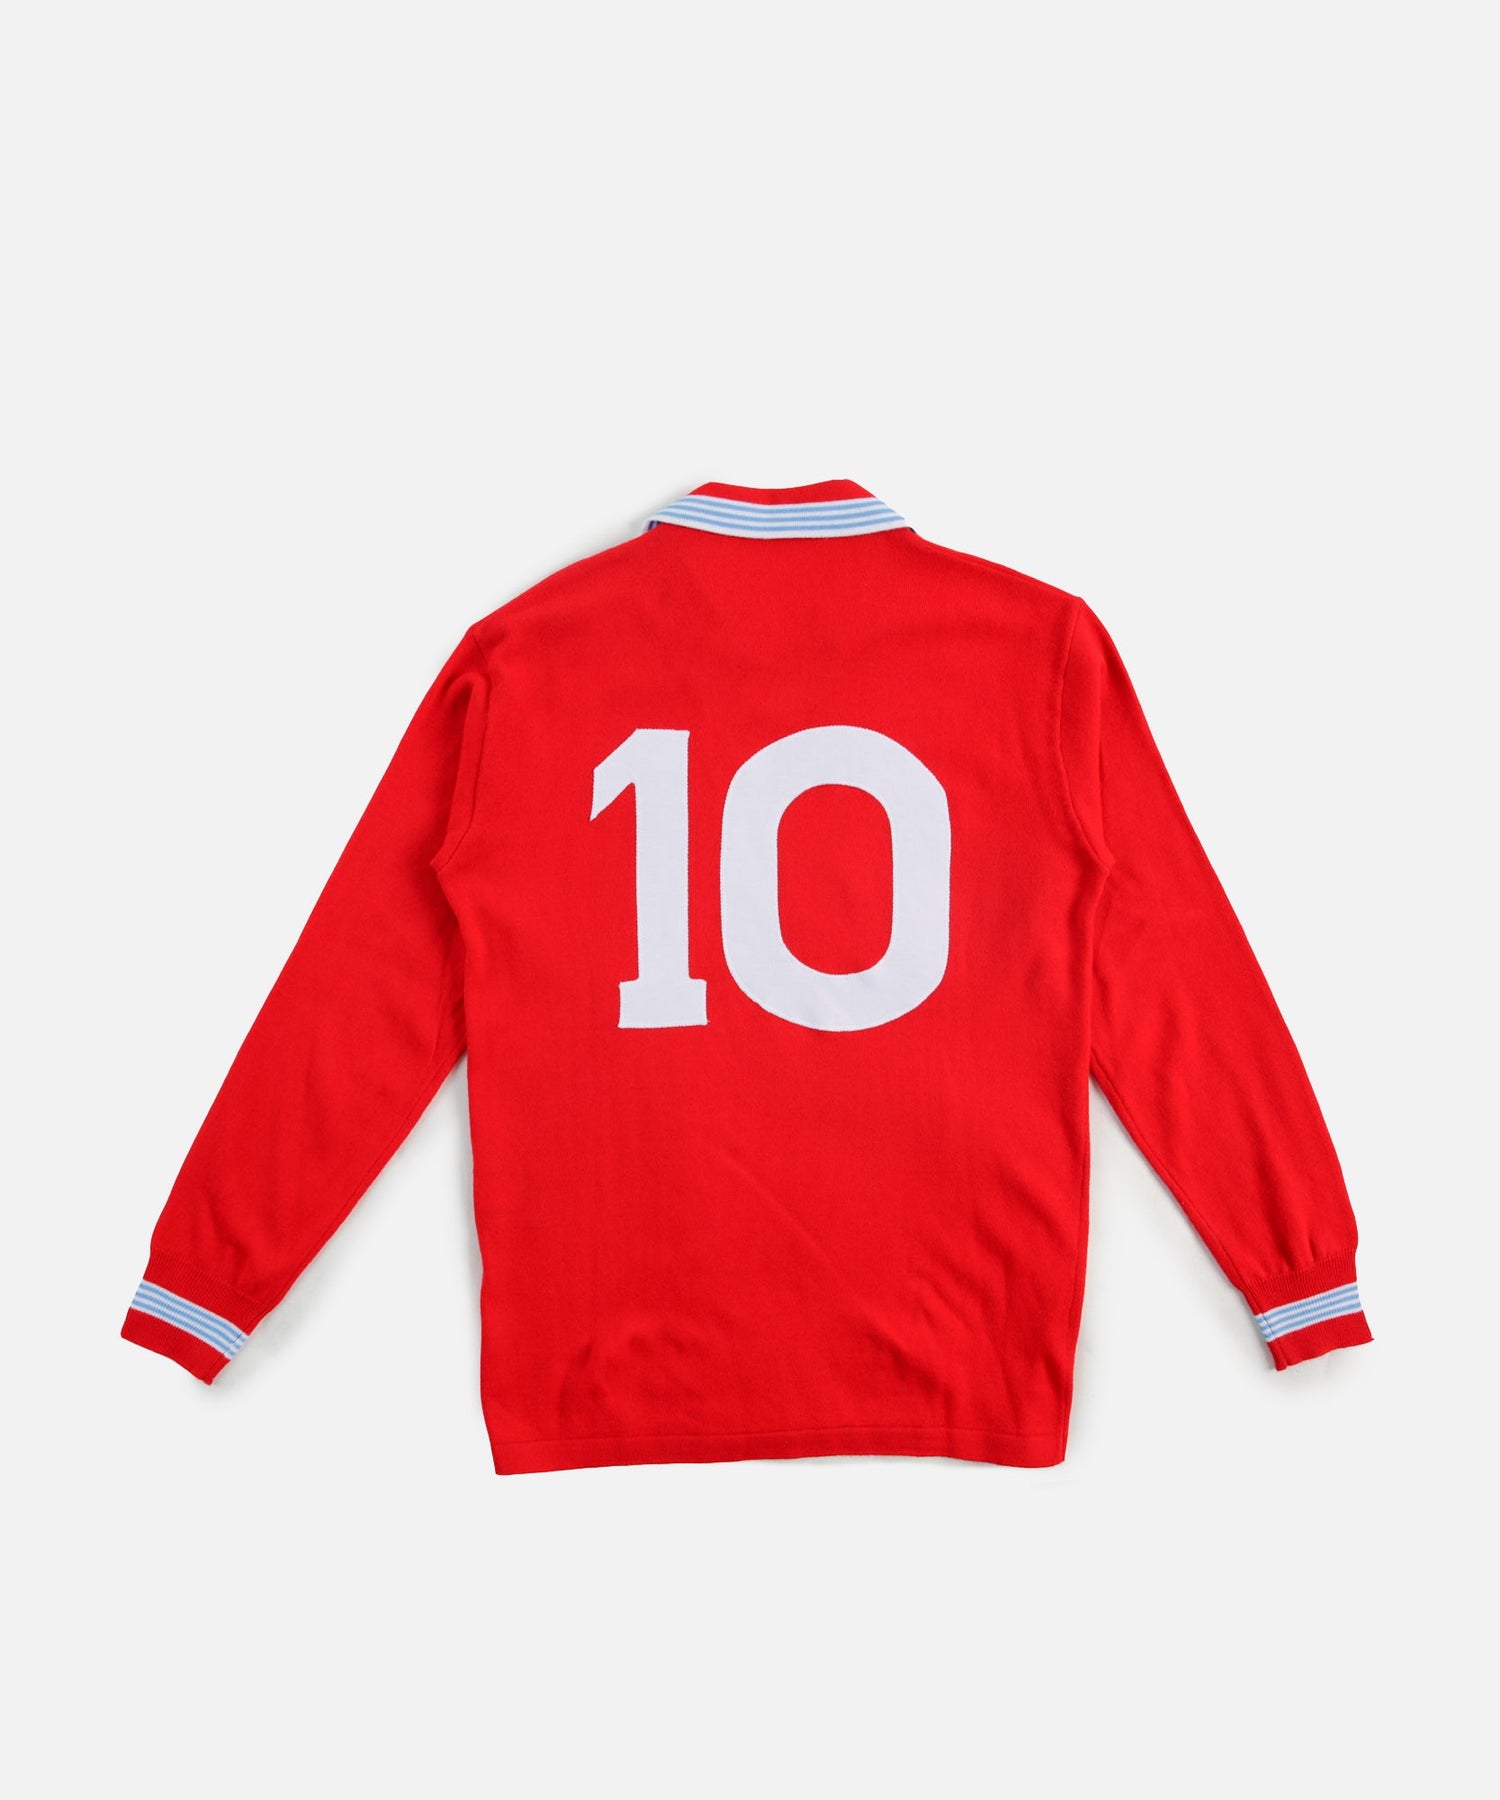 NR x Patta No. 10 Long Sleeve Football Jersey (Napoli Red)